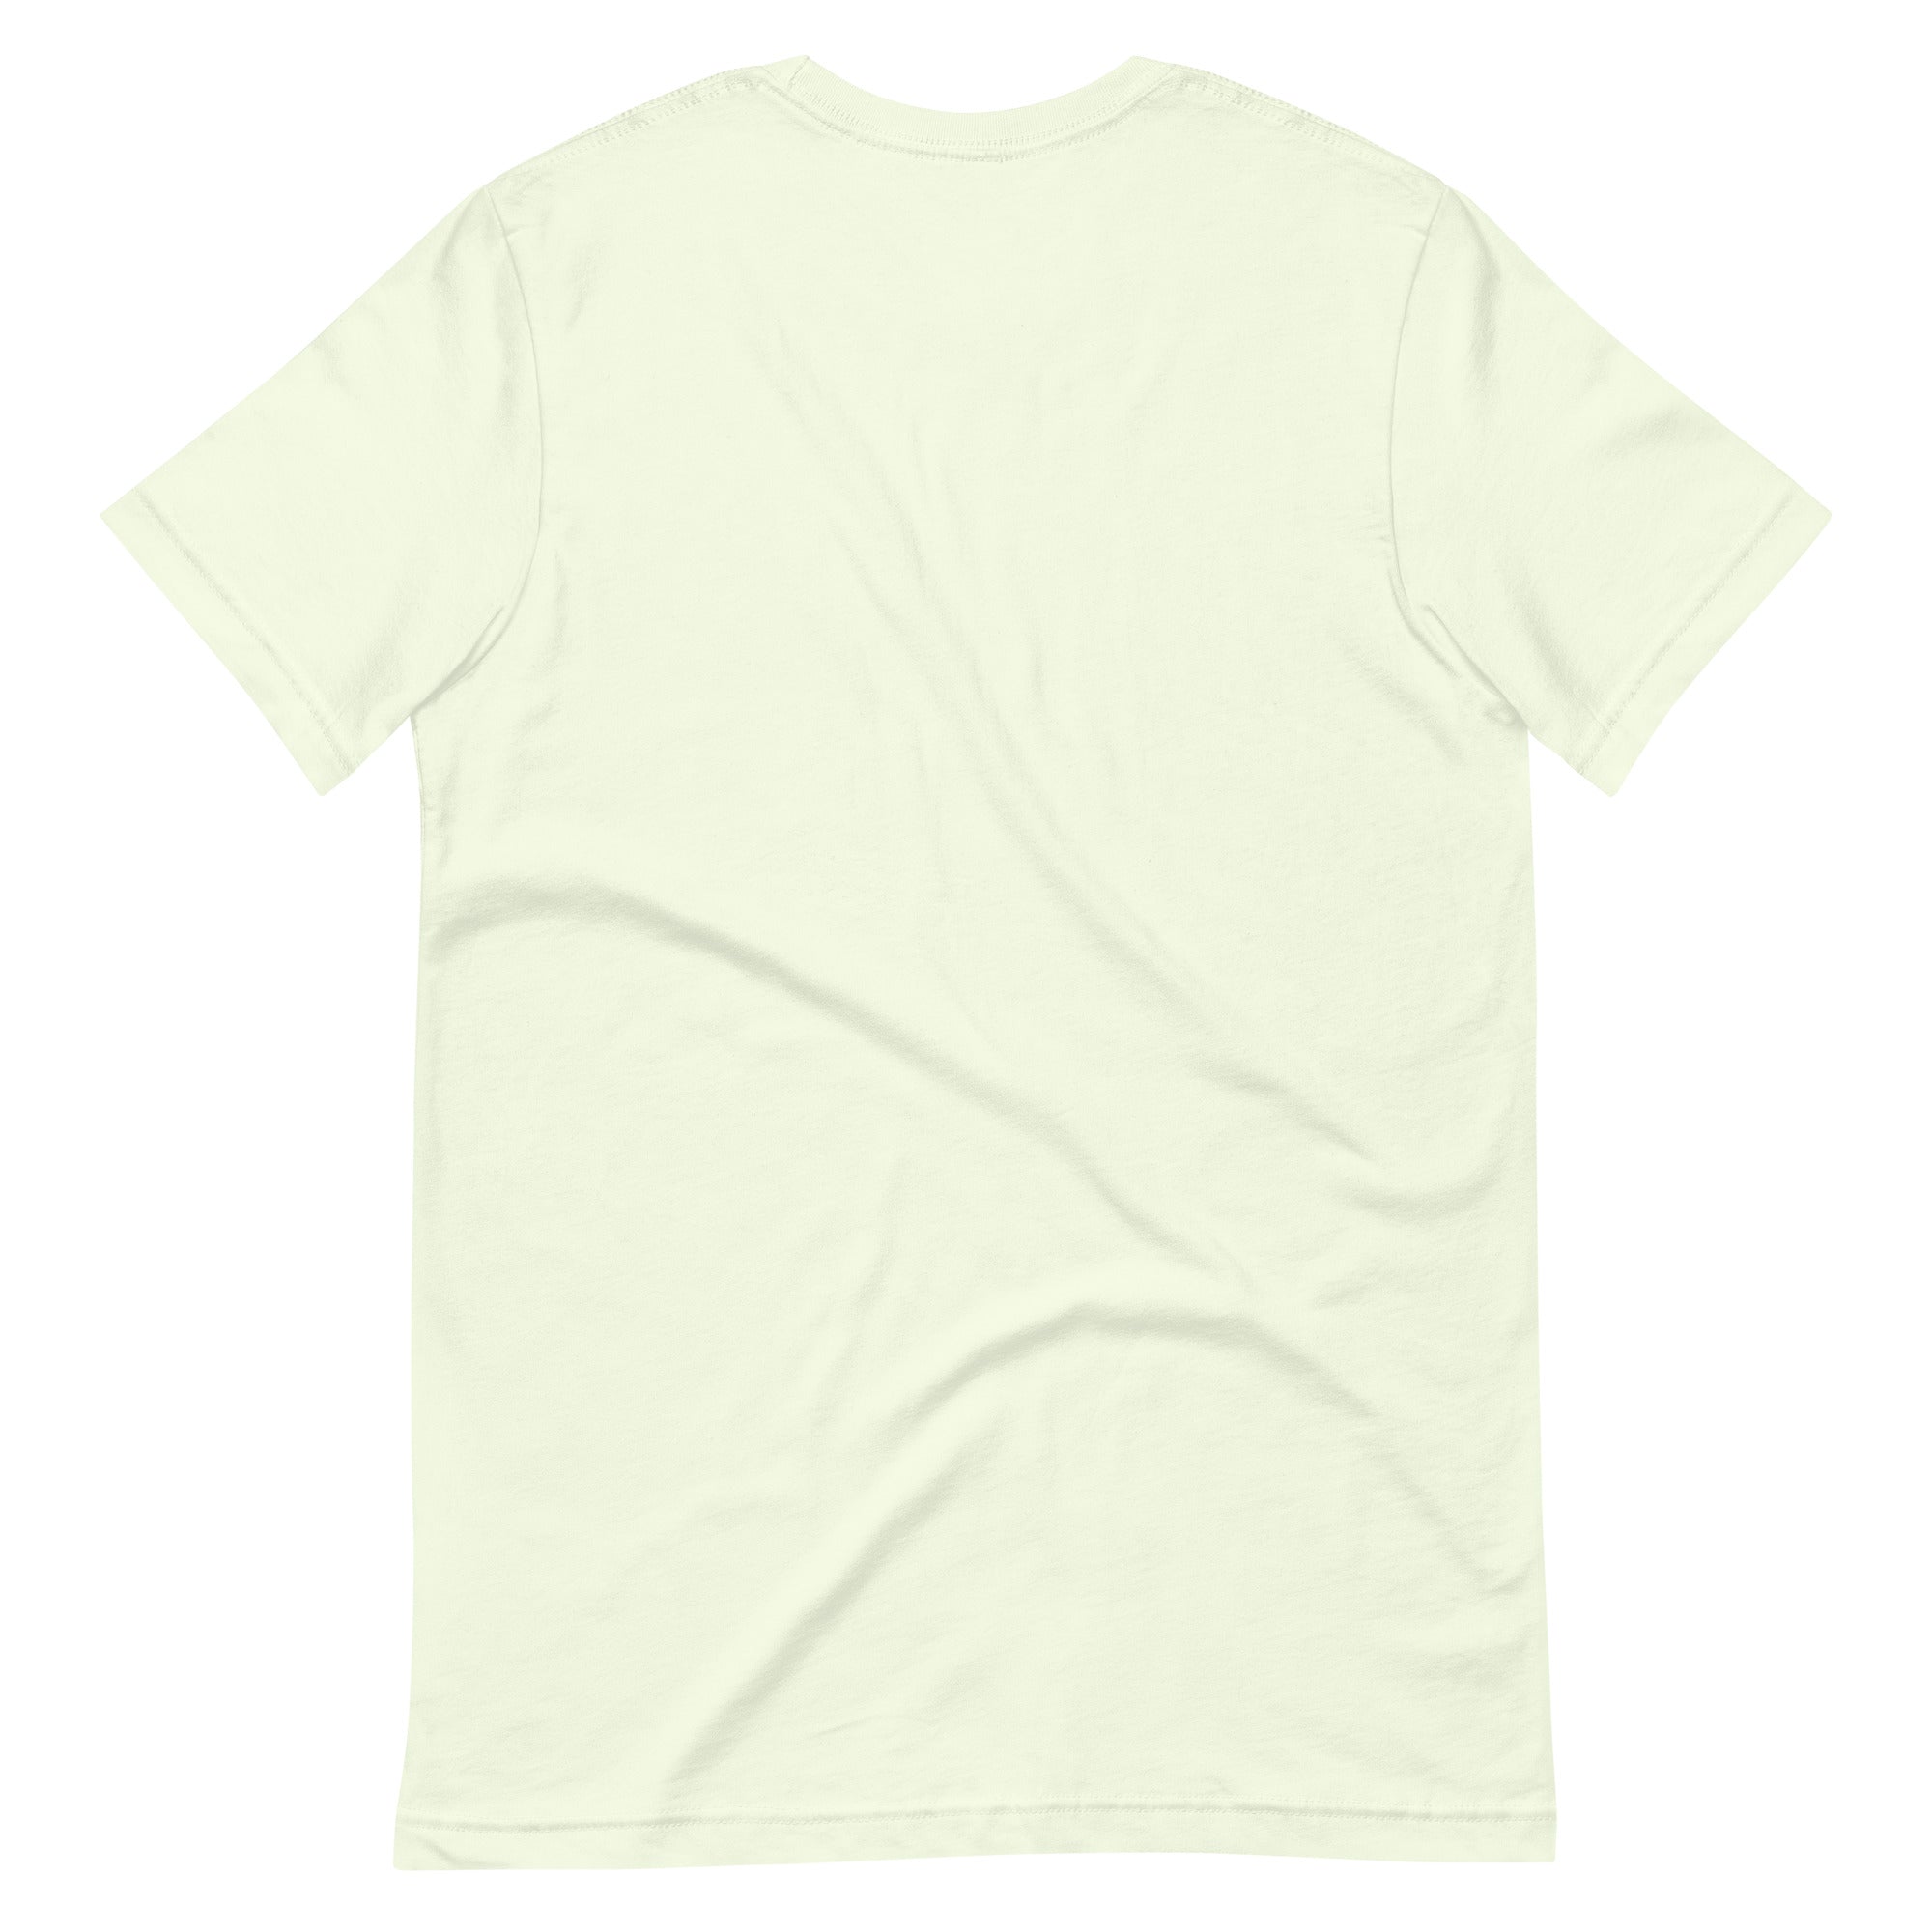 Clishirt© White Fish Unisex t-shirt